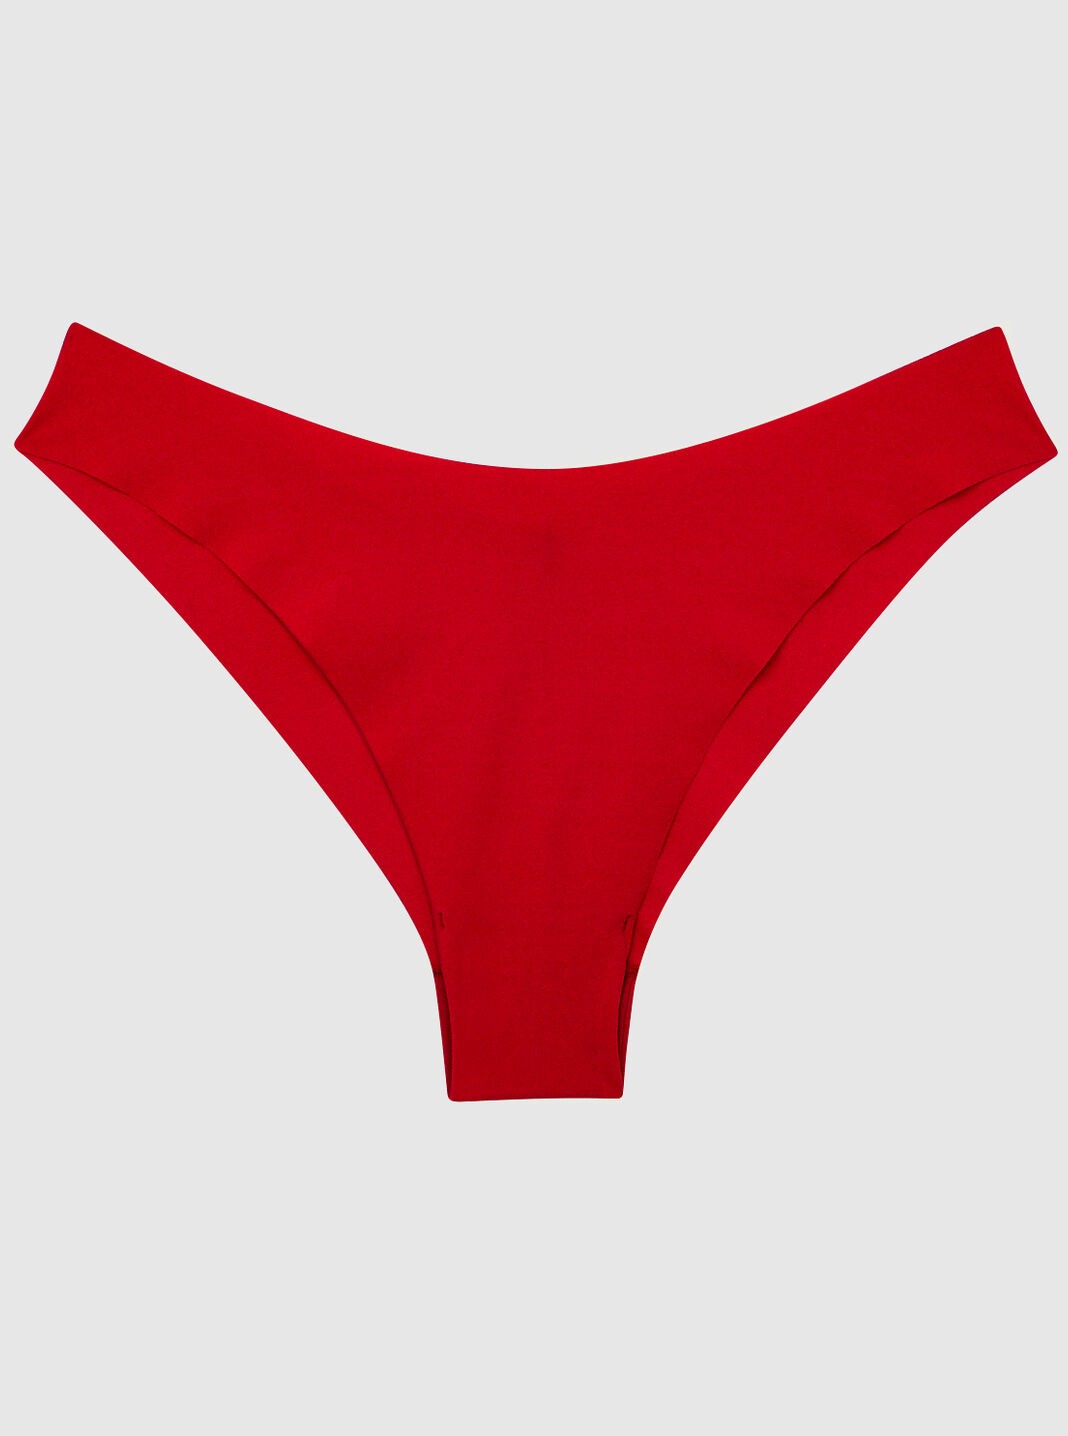 LEVAO Women Seamless Thongs No Show Panties Comfortable Underwear